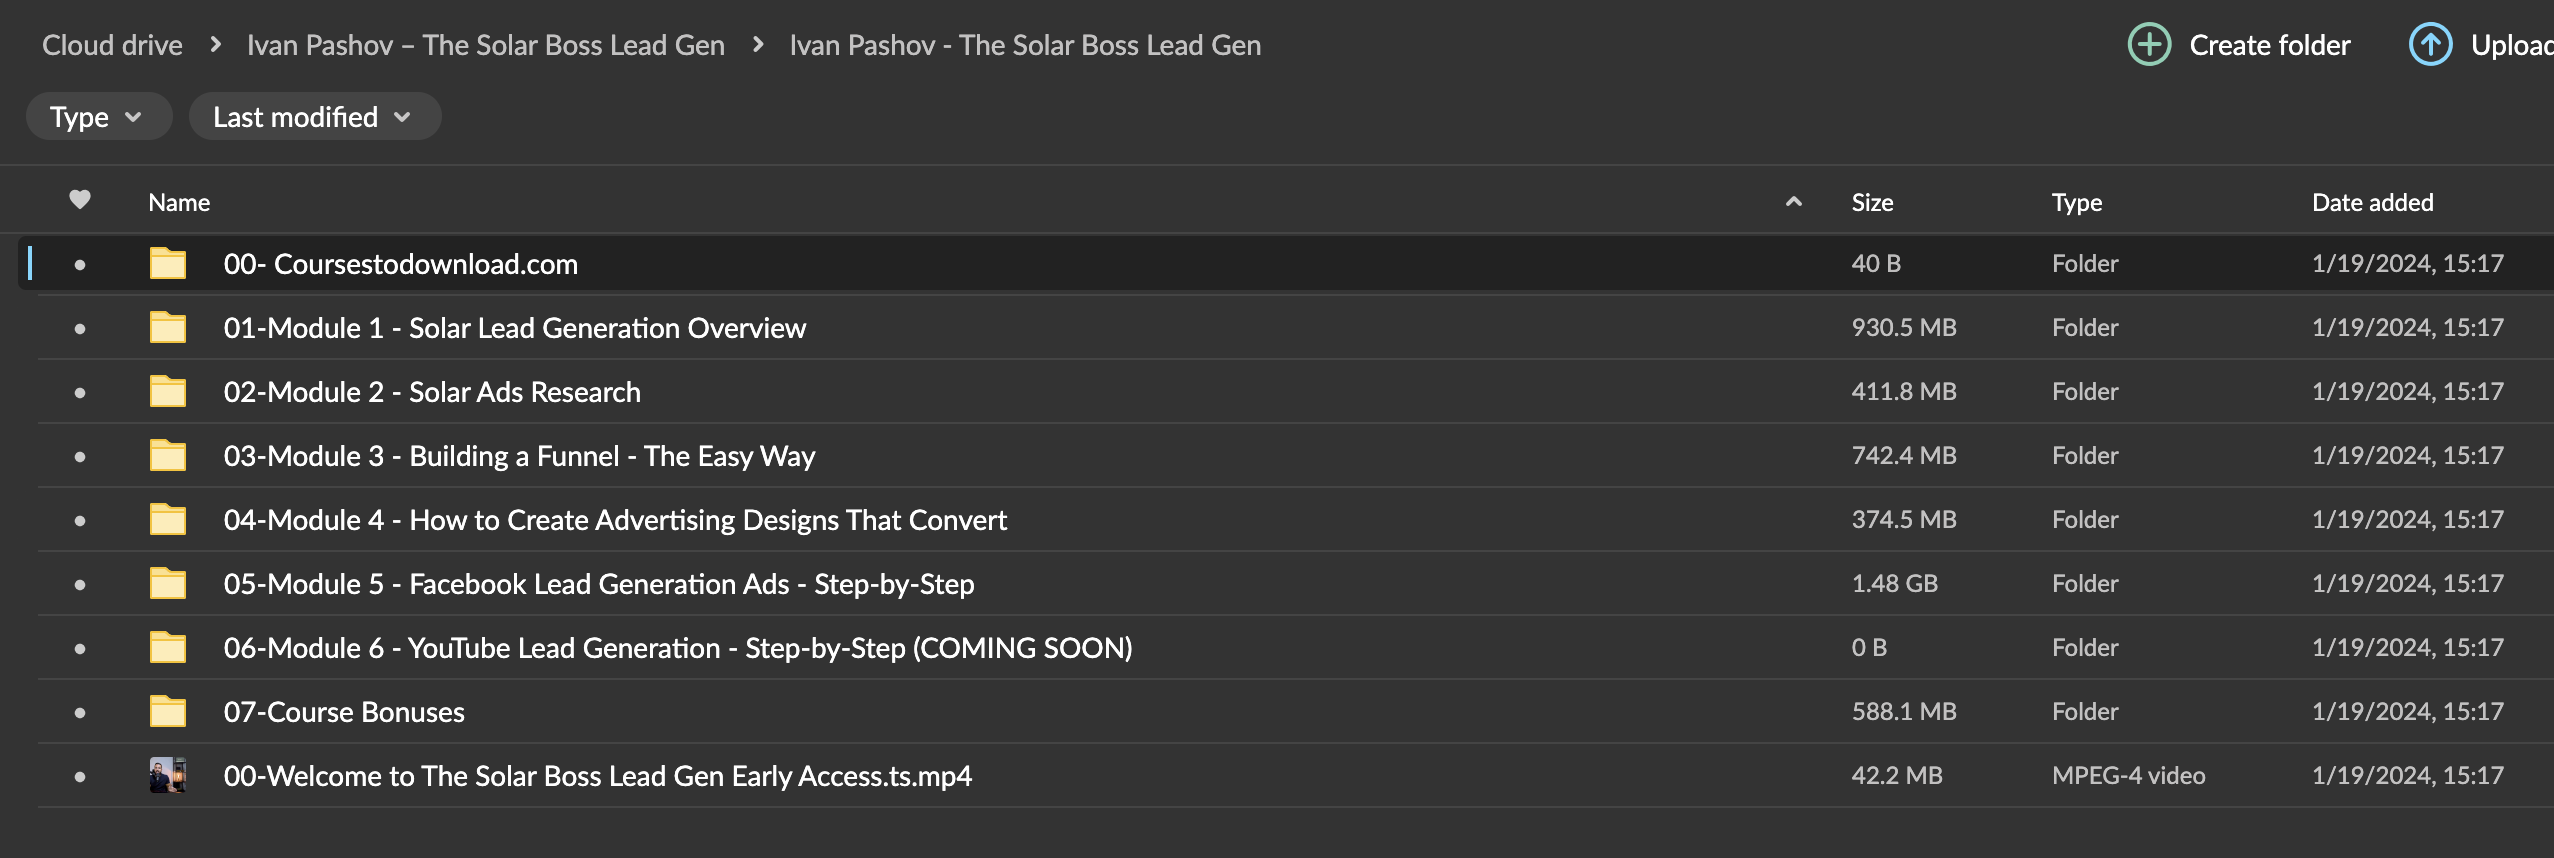 Ivan Pashov – The Solar Boss Lead Gen Download